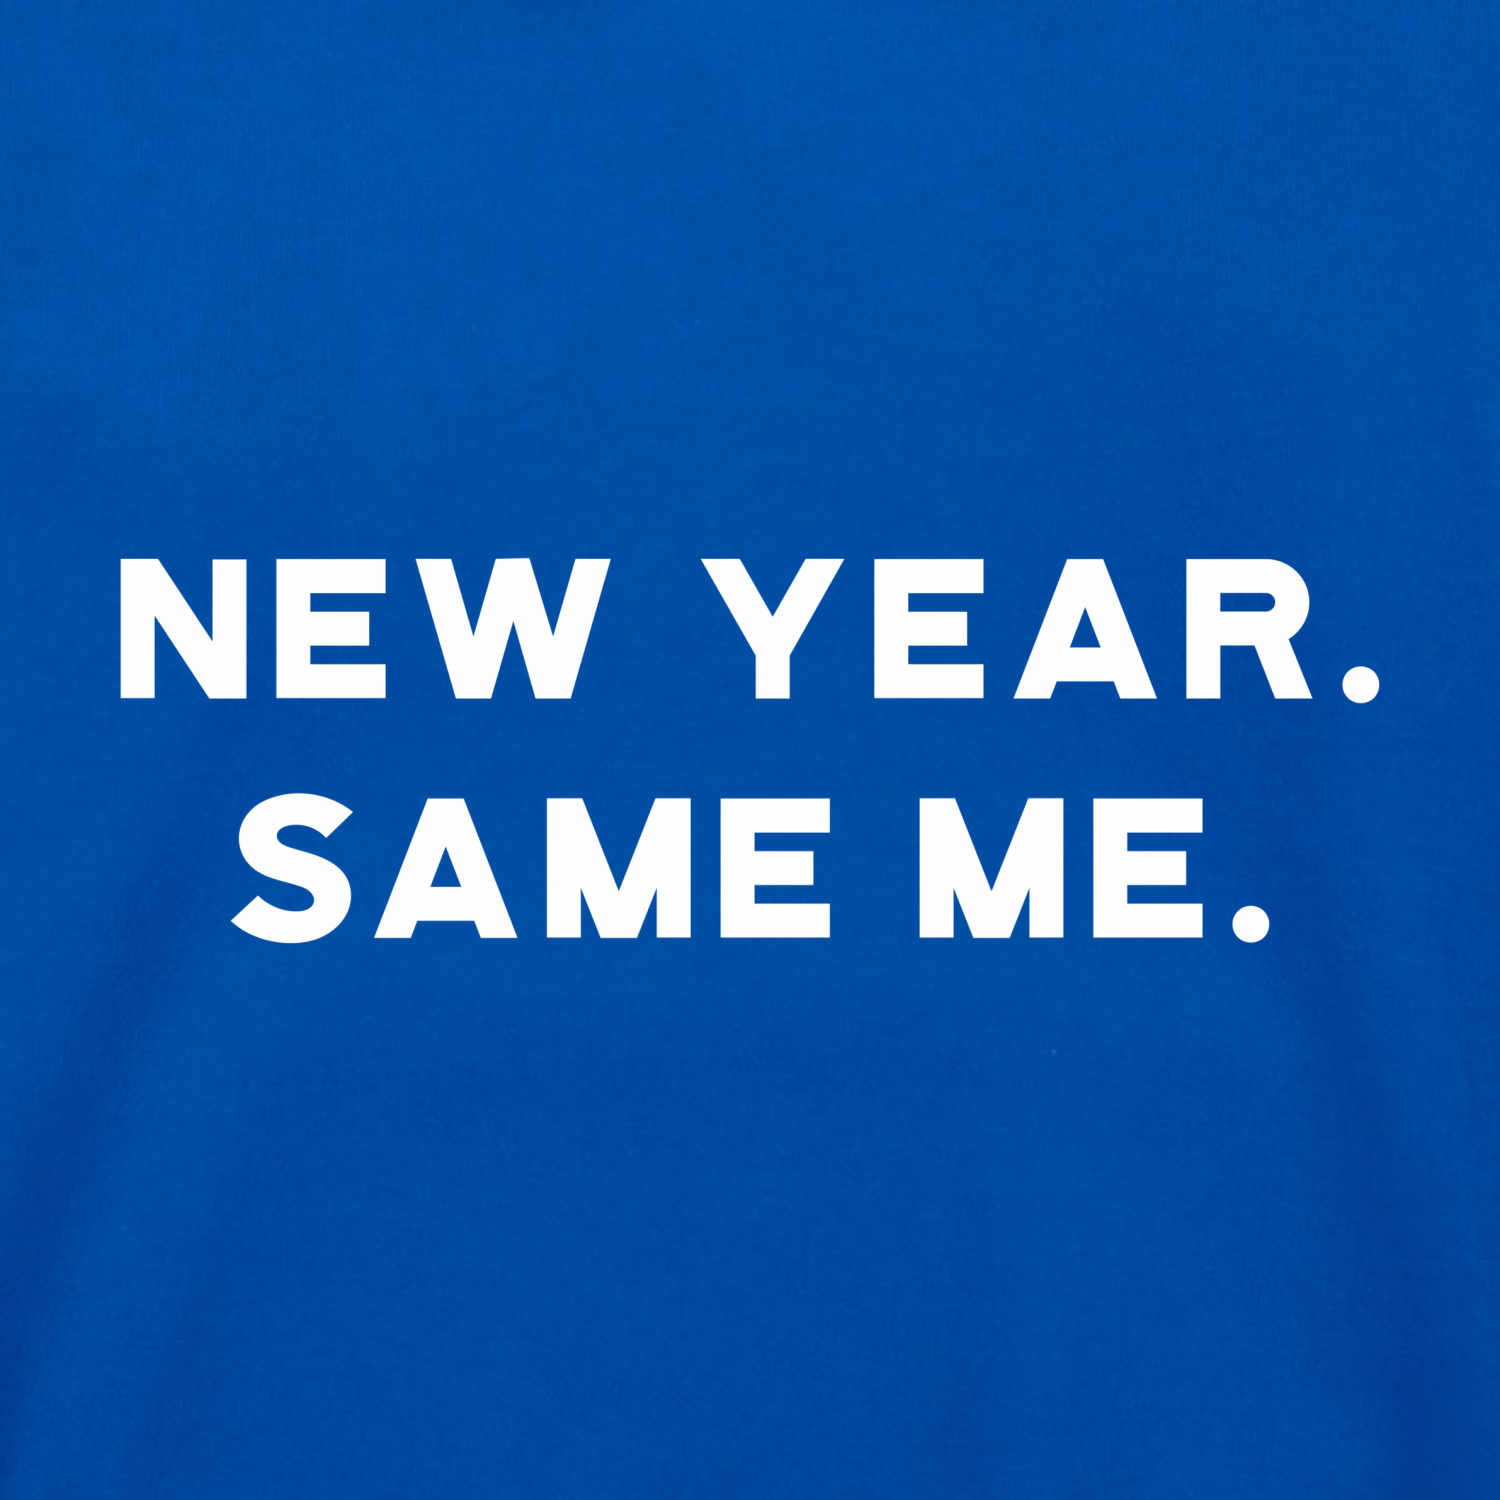 Толстовка унисекс 'New Year. Same me.'